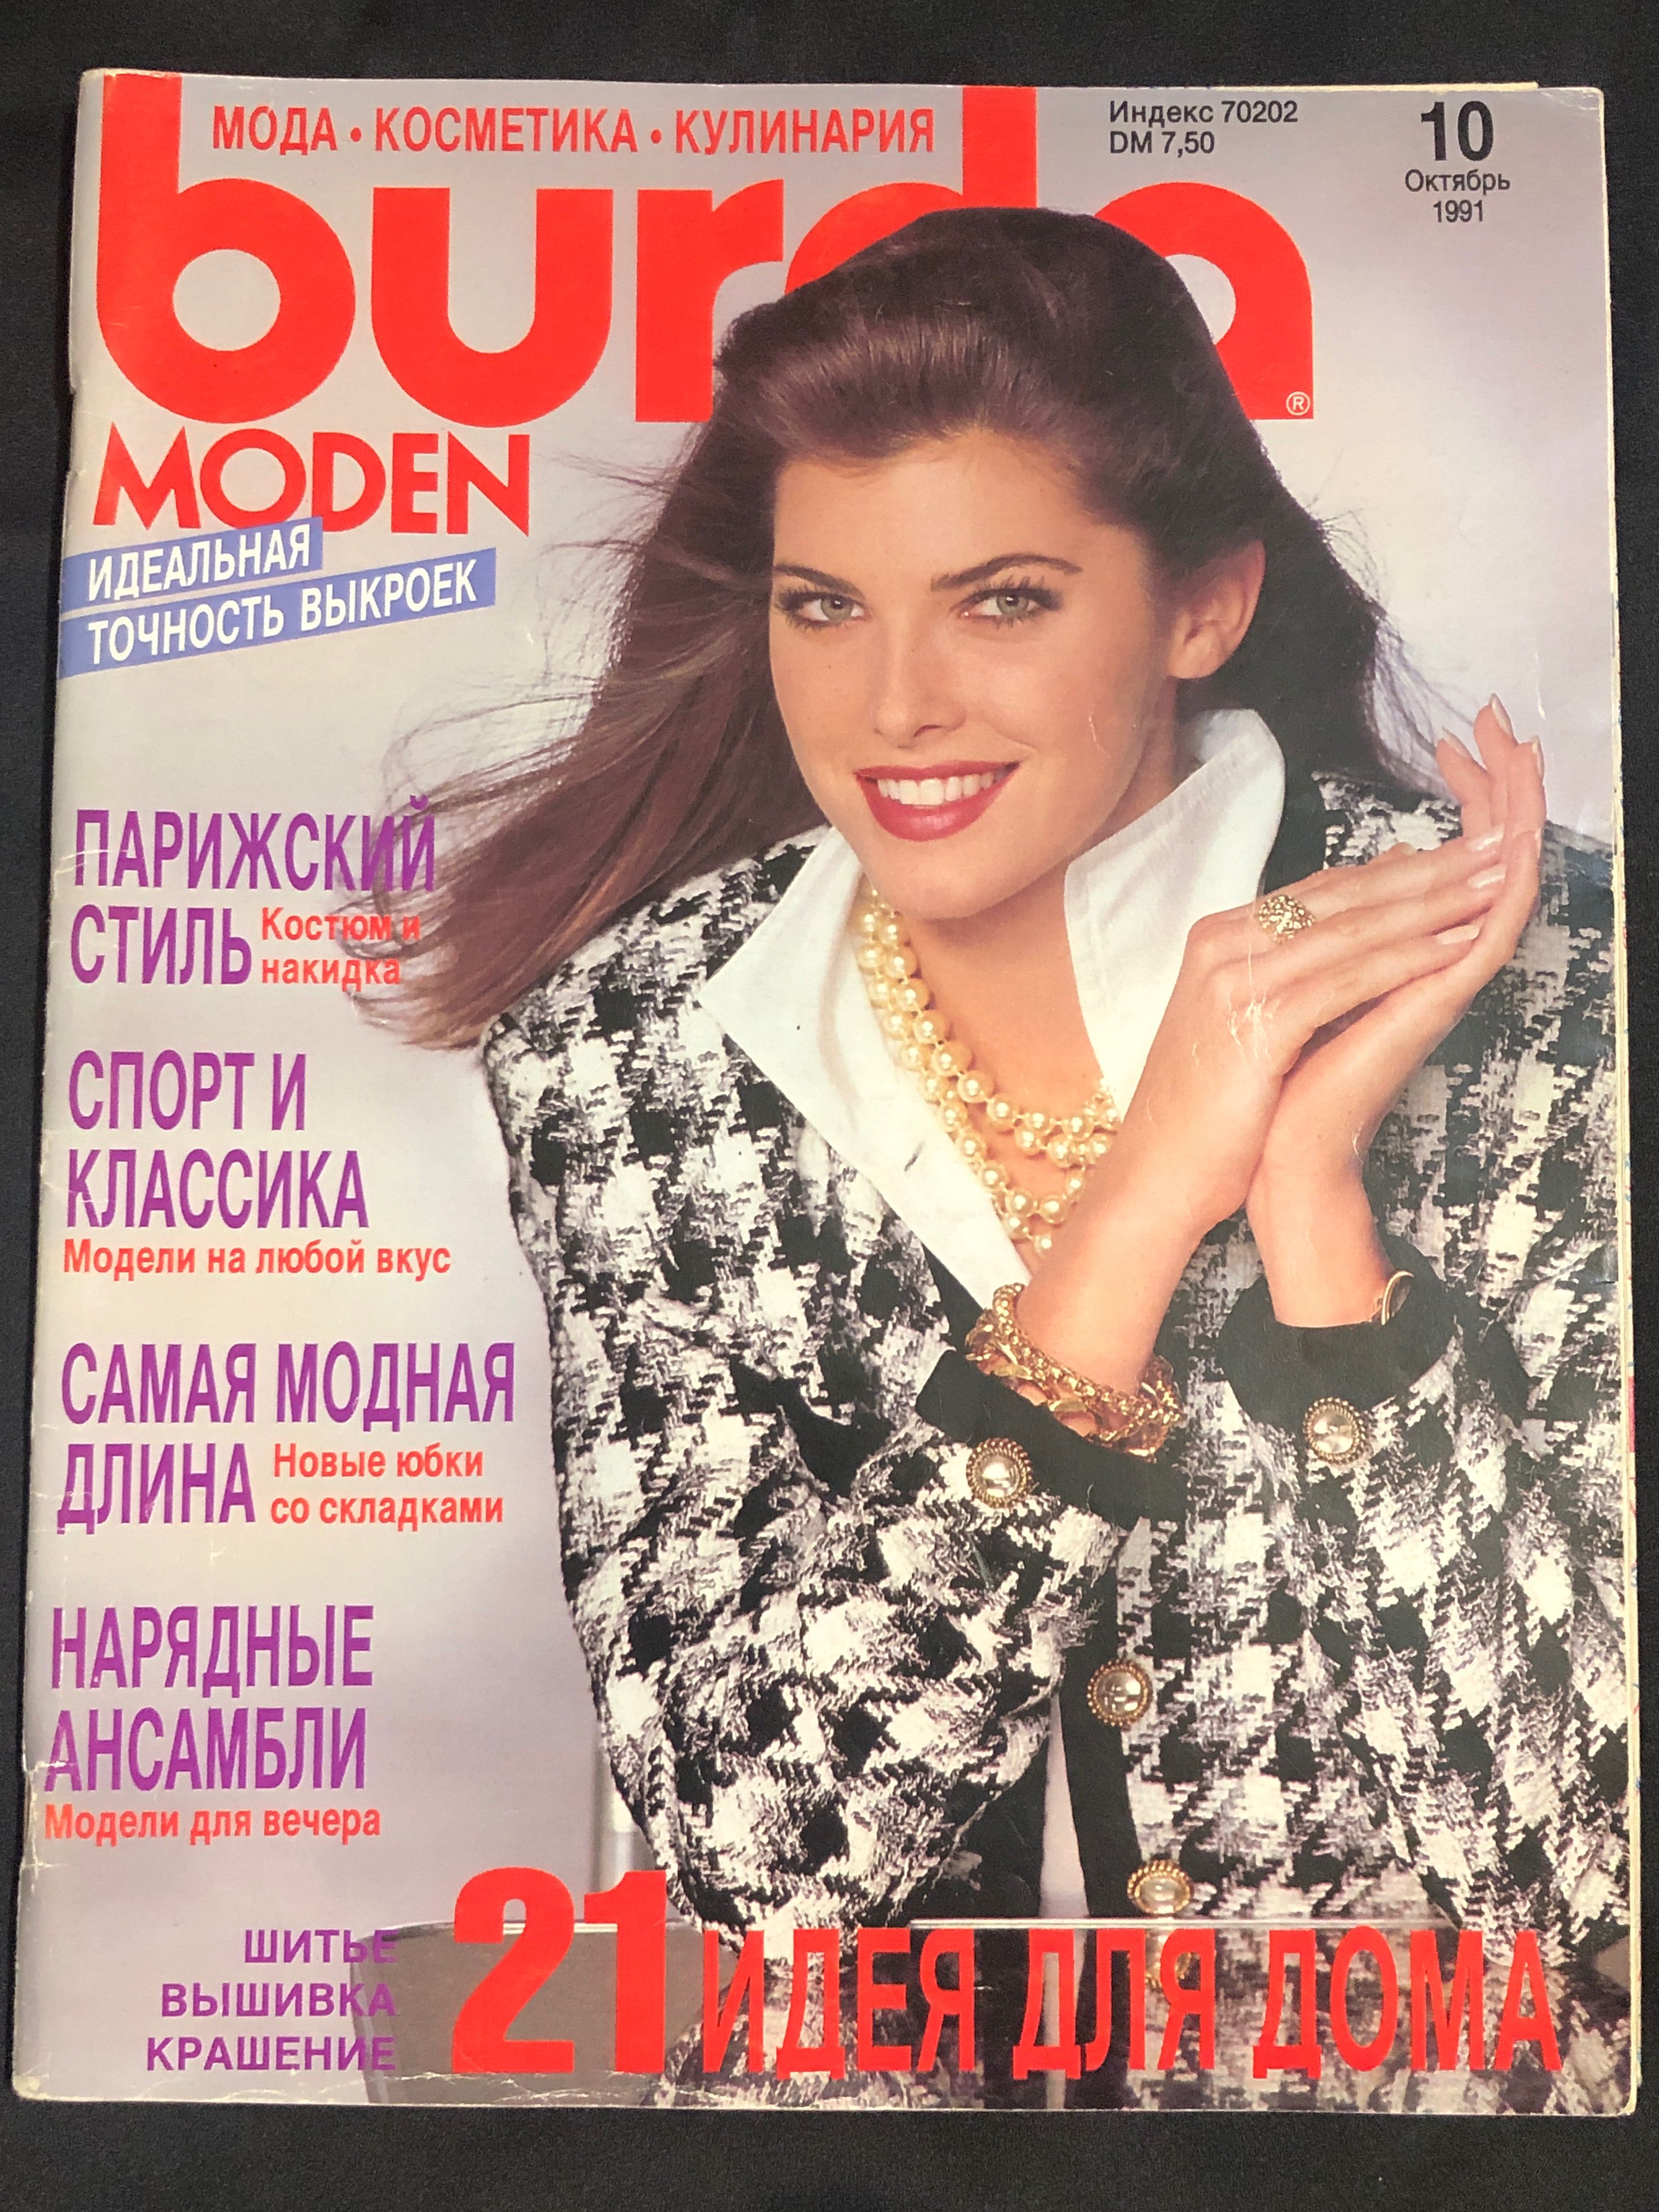 Бурда моден 1991 9. Журнал Burda moden 9 1991. Журнал Бурда моден 1990. Burda moden журнал 1991. Бурда моден май